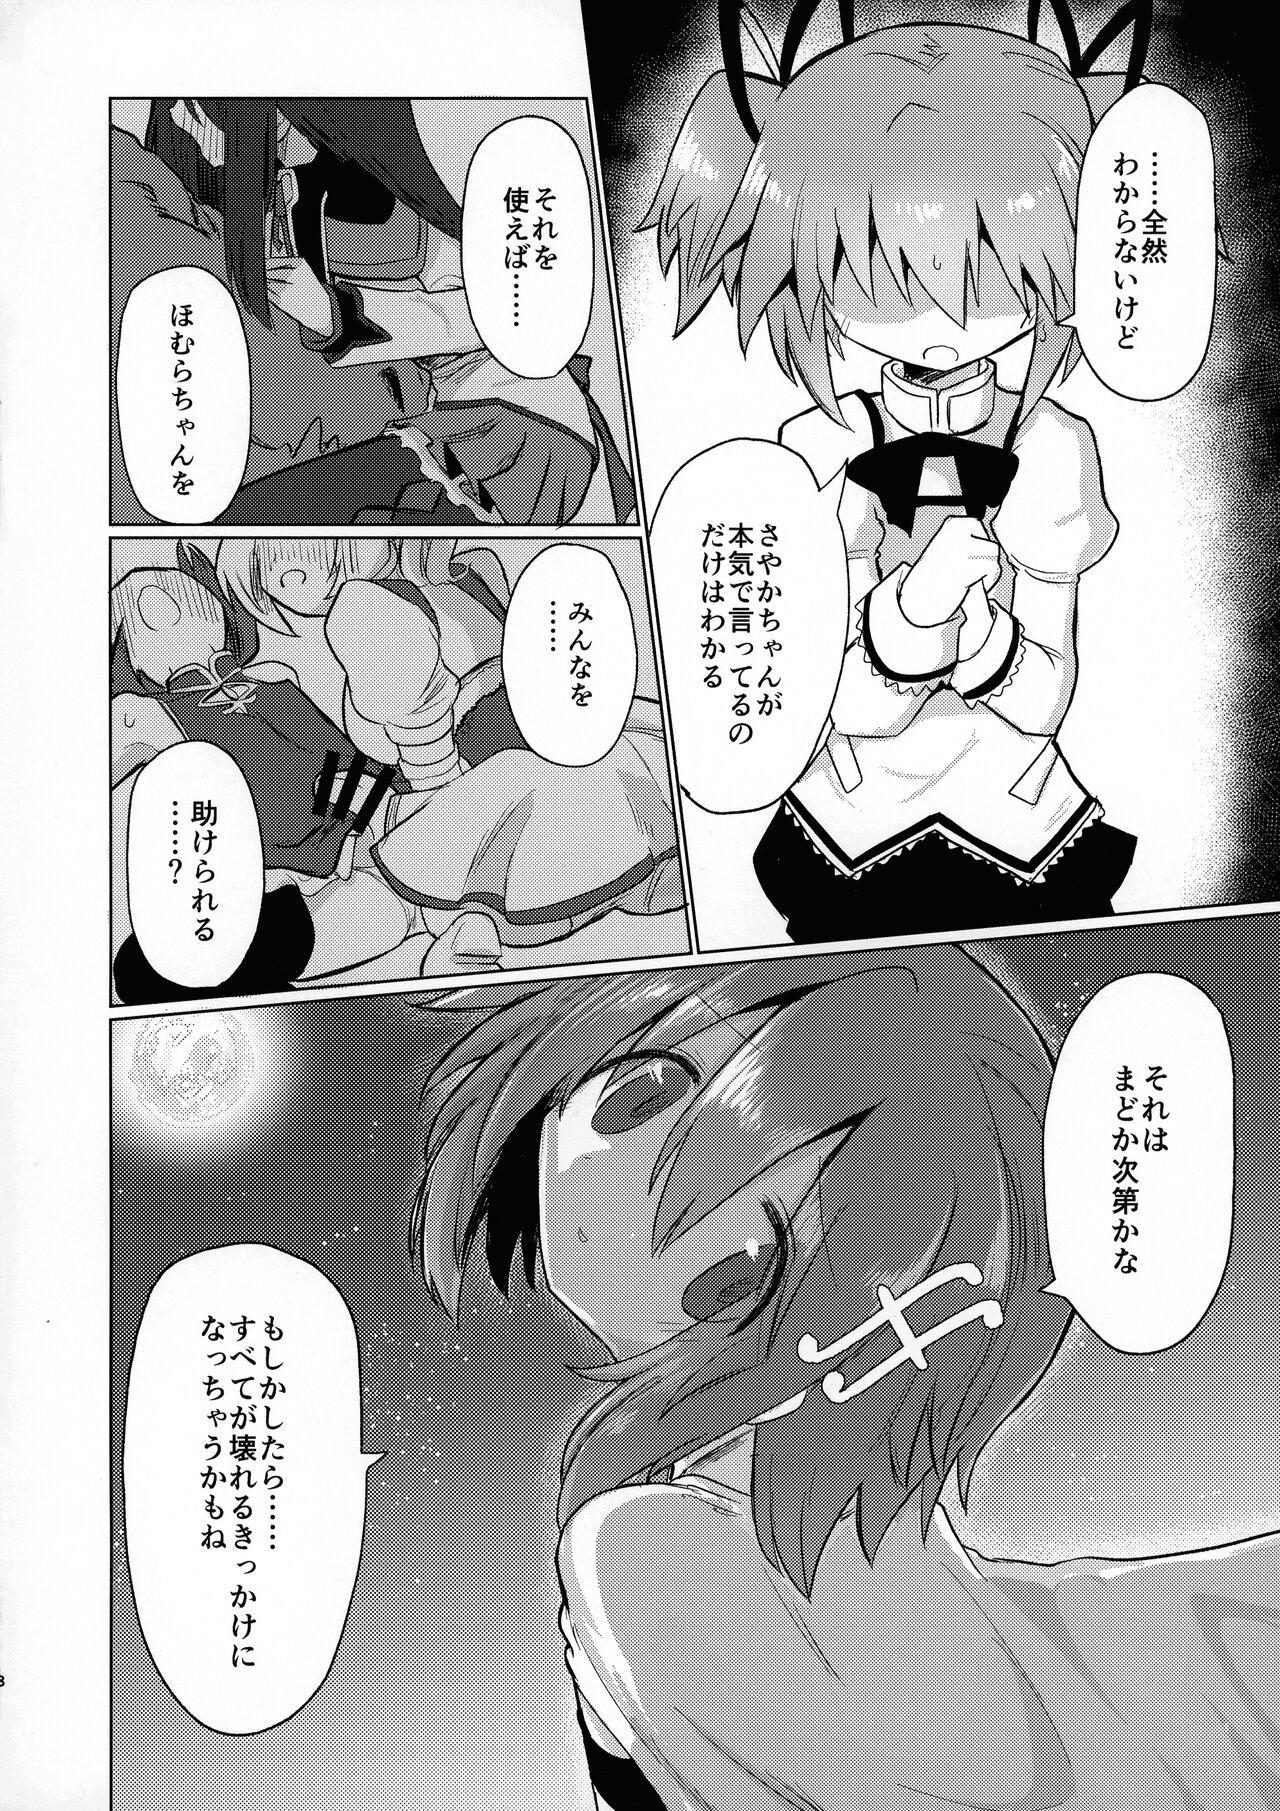 Stepbro Fellatiosaurus VS Mahou Shoujo Kouhen - Puella magi madoka magica Stretching - Page 8